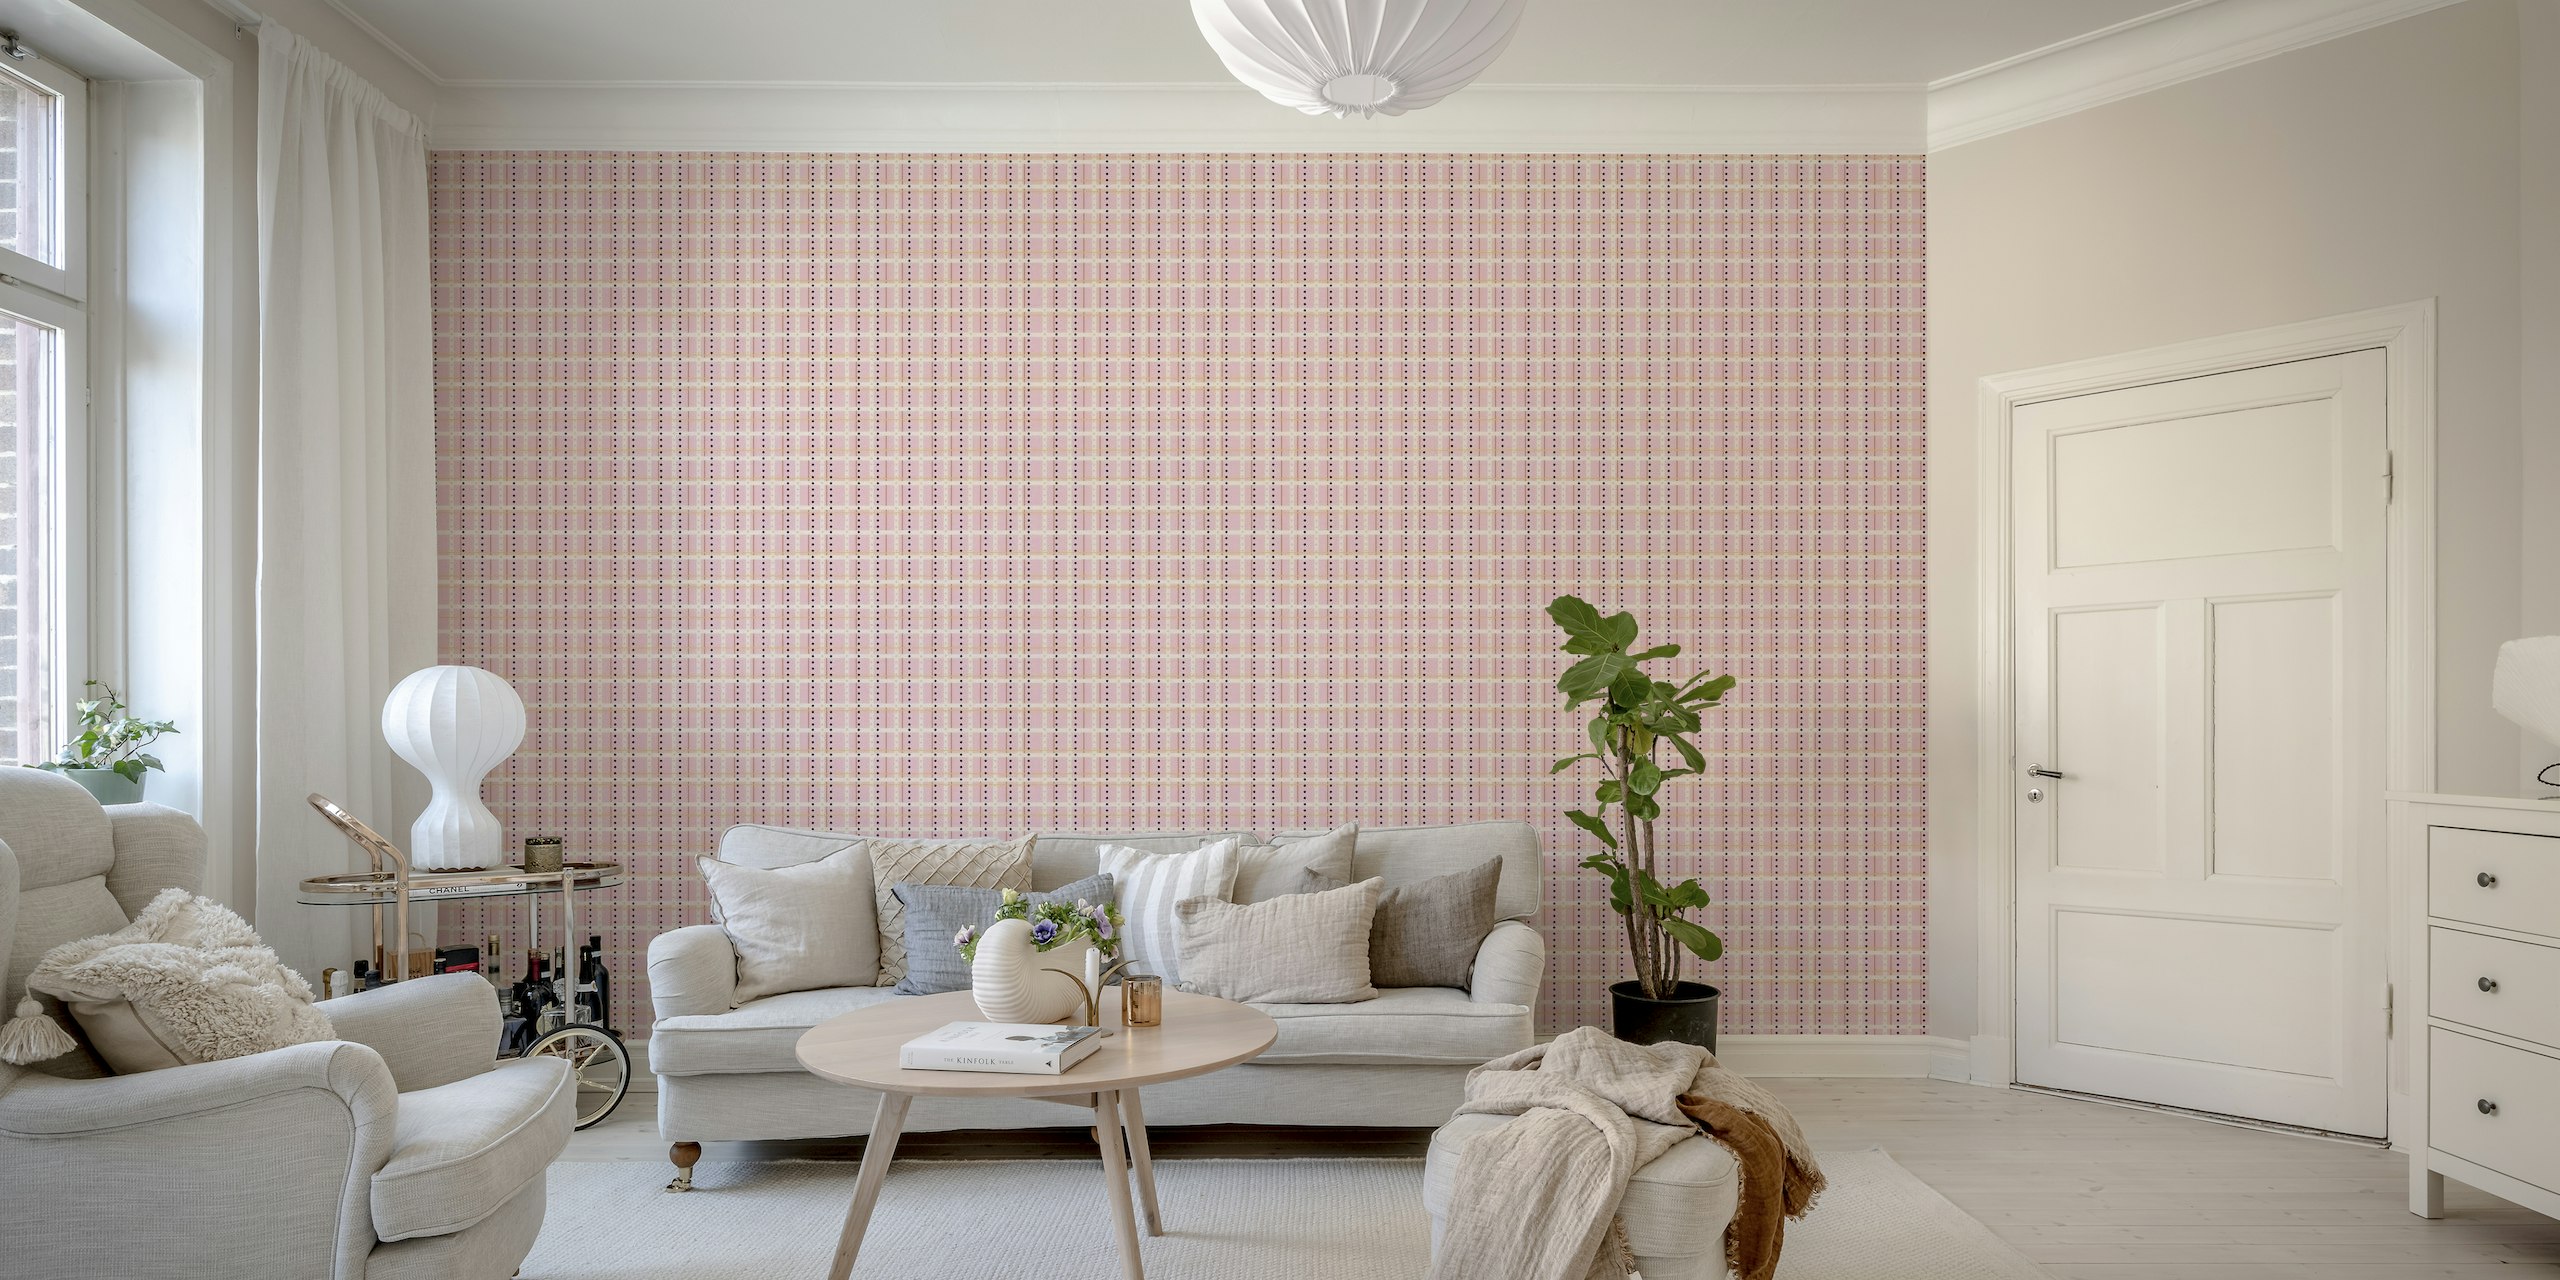 Fototapeta French Dotted Checks Pink s jemným a elegantním vzorem